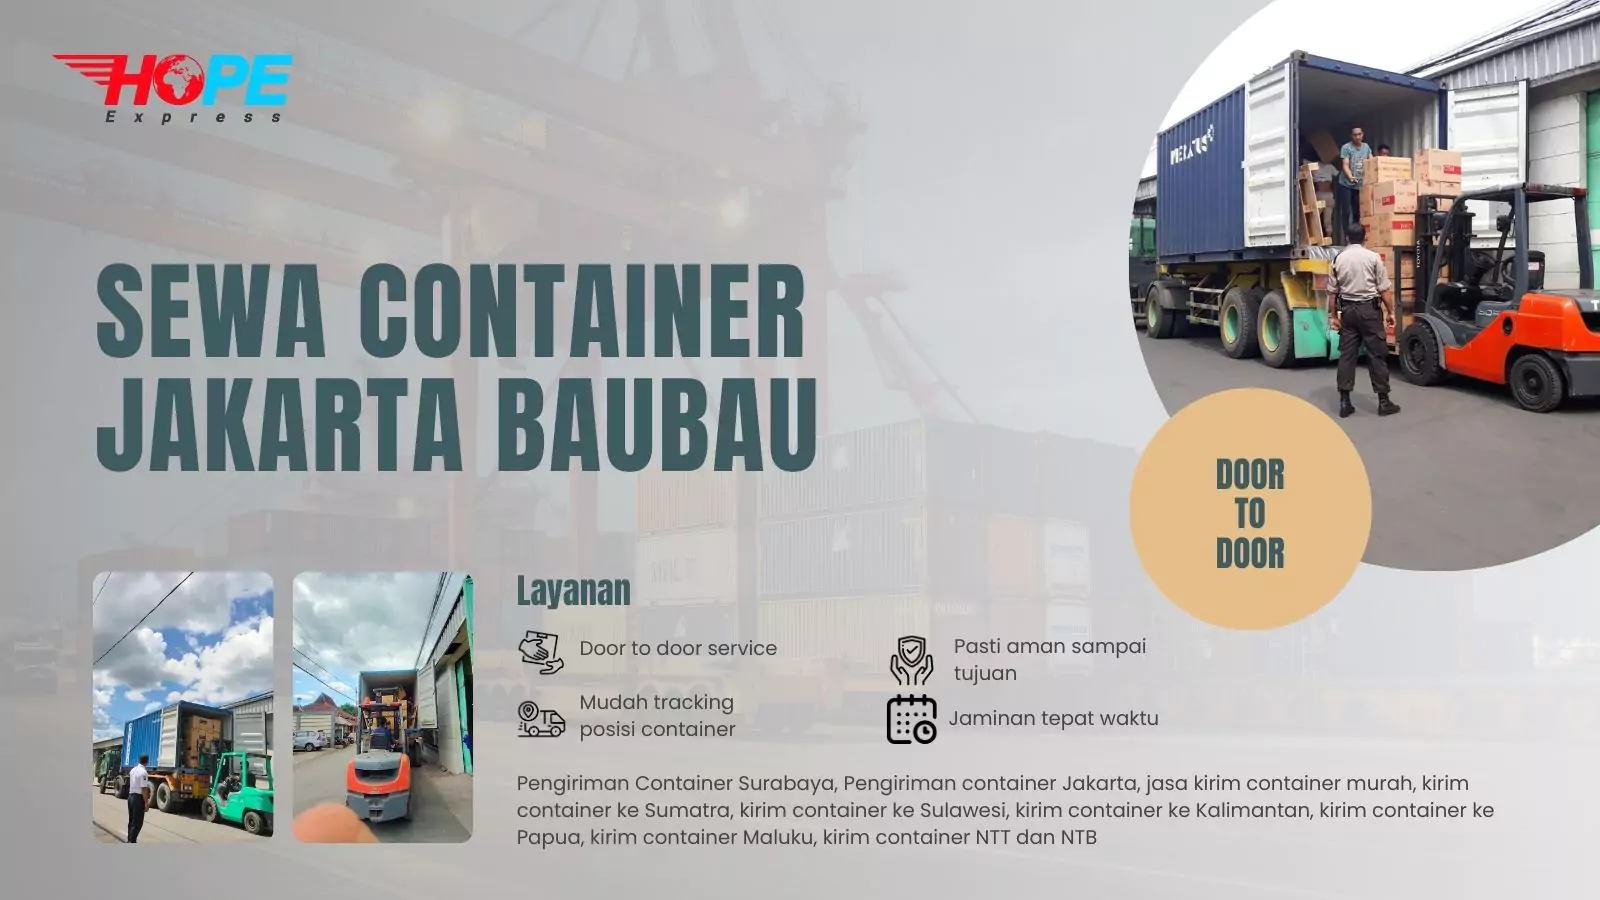 Sewa Container Jakarta Baubau